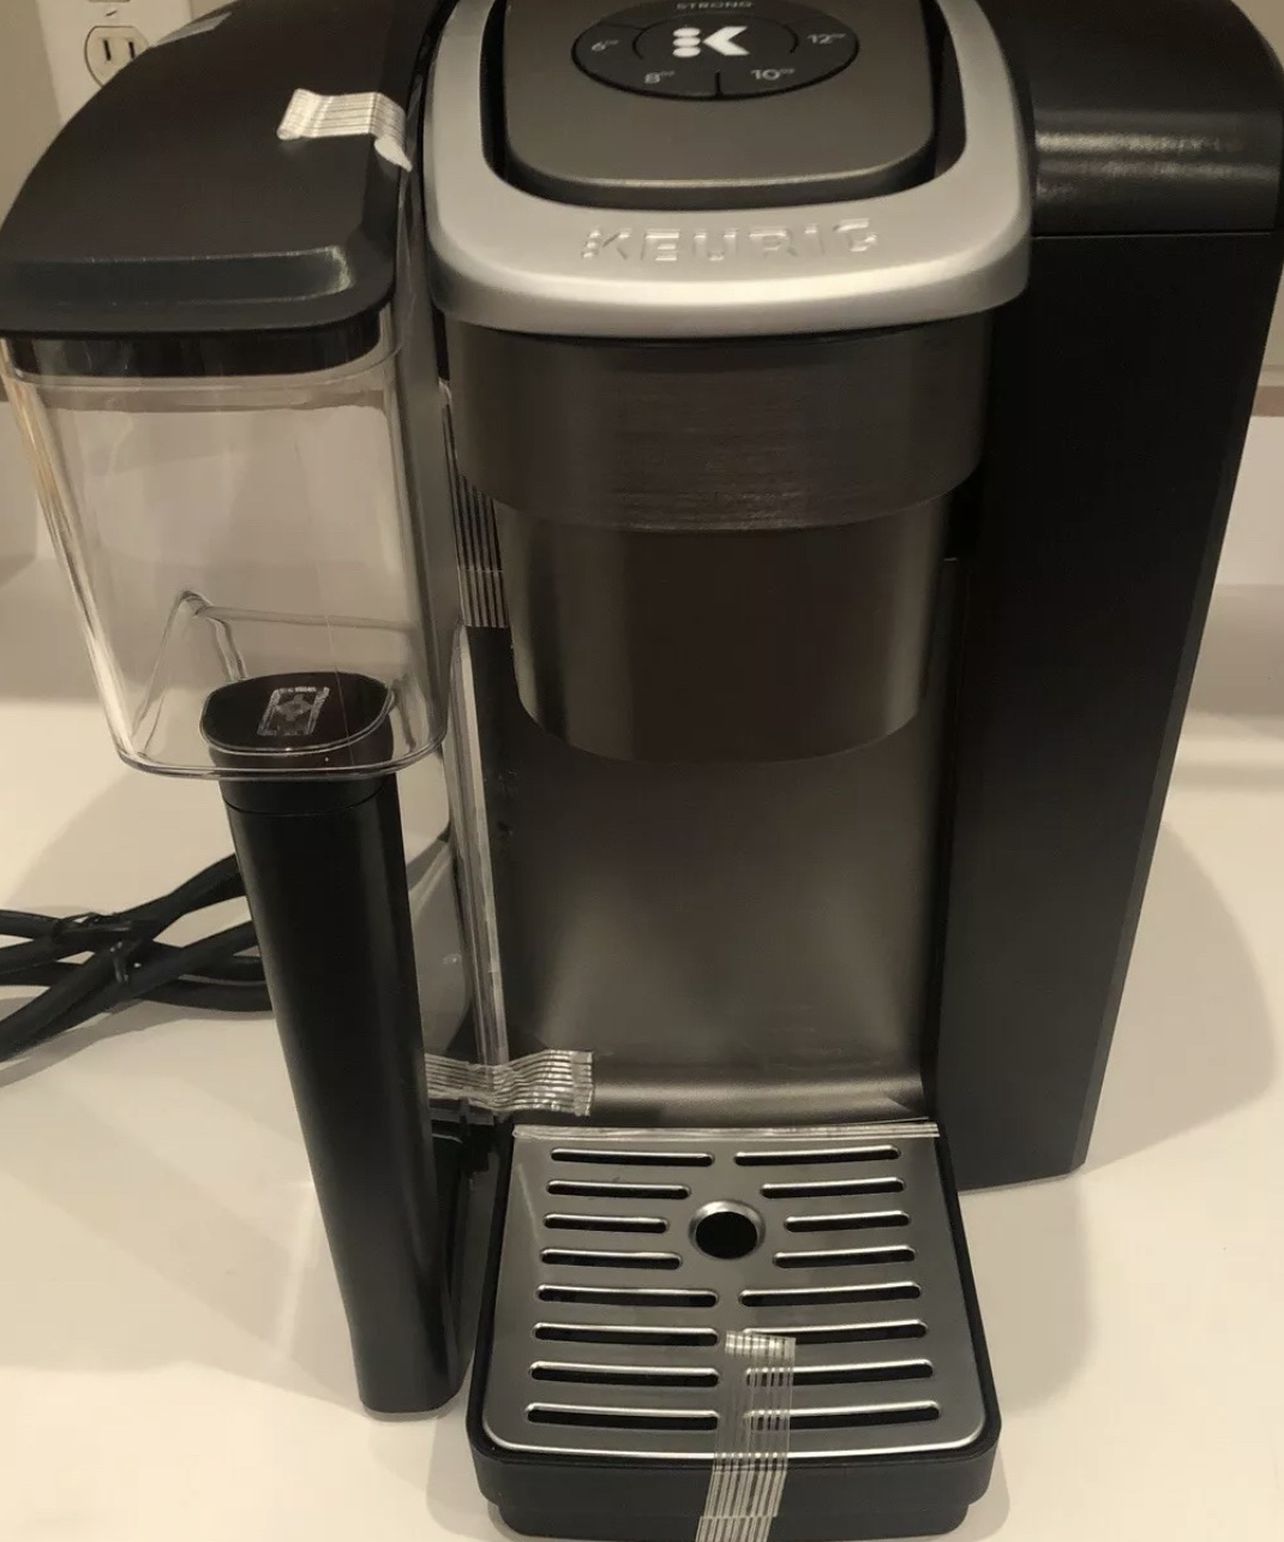 Keurig K-1500 Commercial Coffee Maker- Brand New In Box